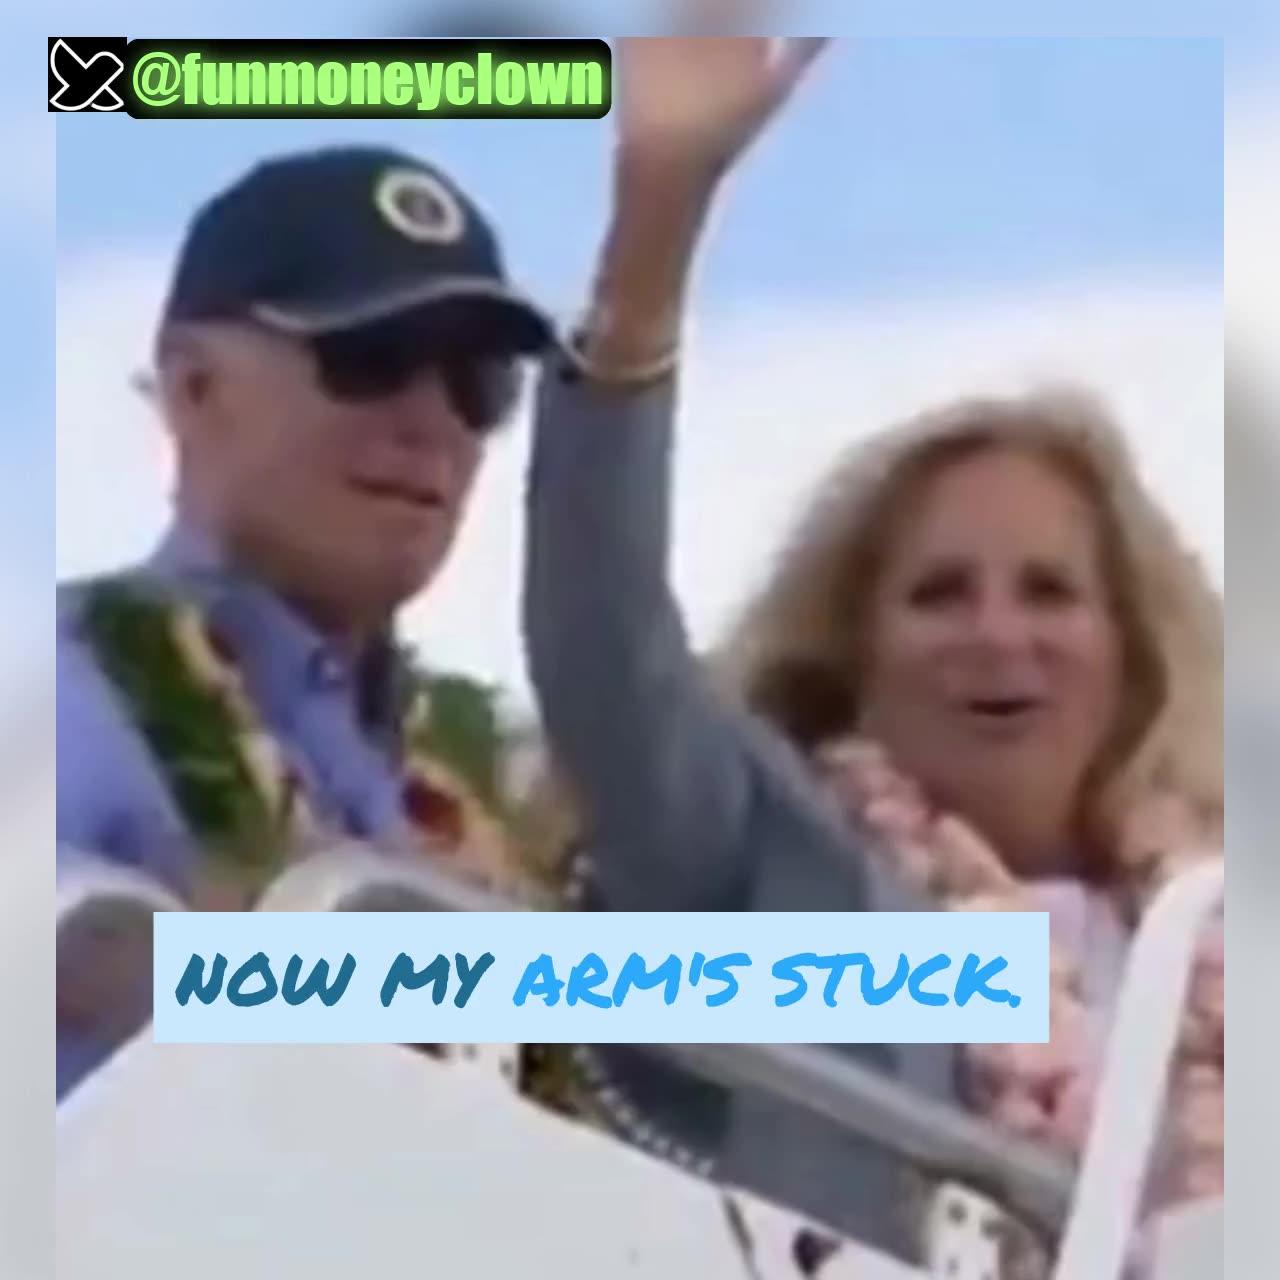 Joe JoJo Biden leaves Maui, Hawaii - Parody